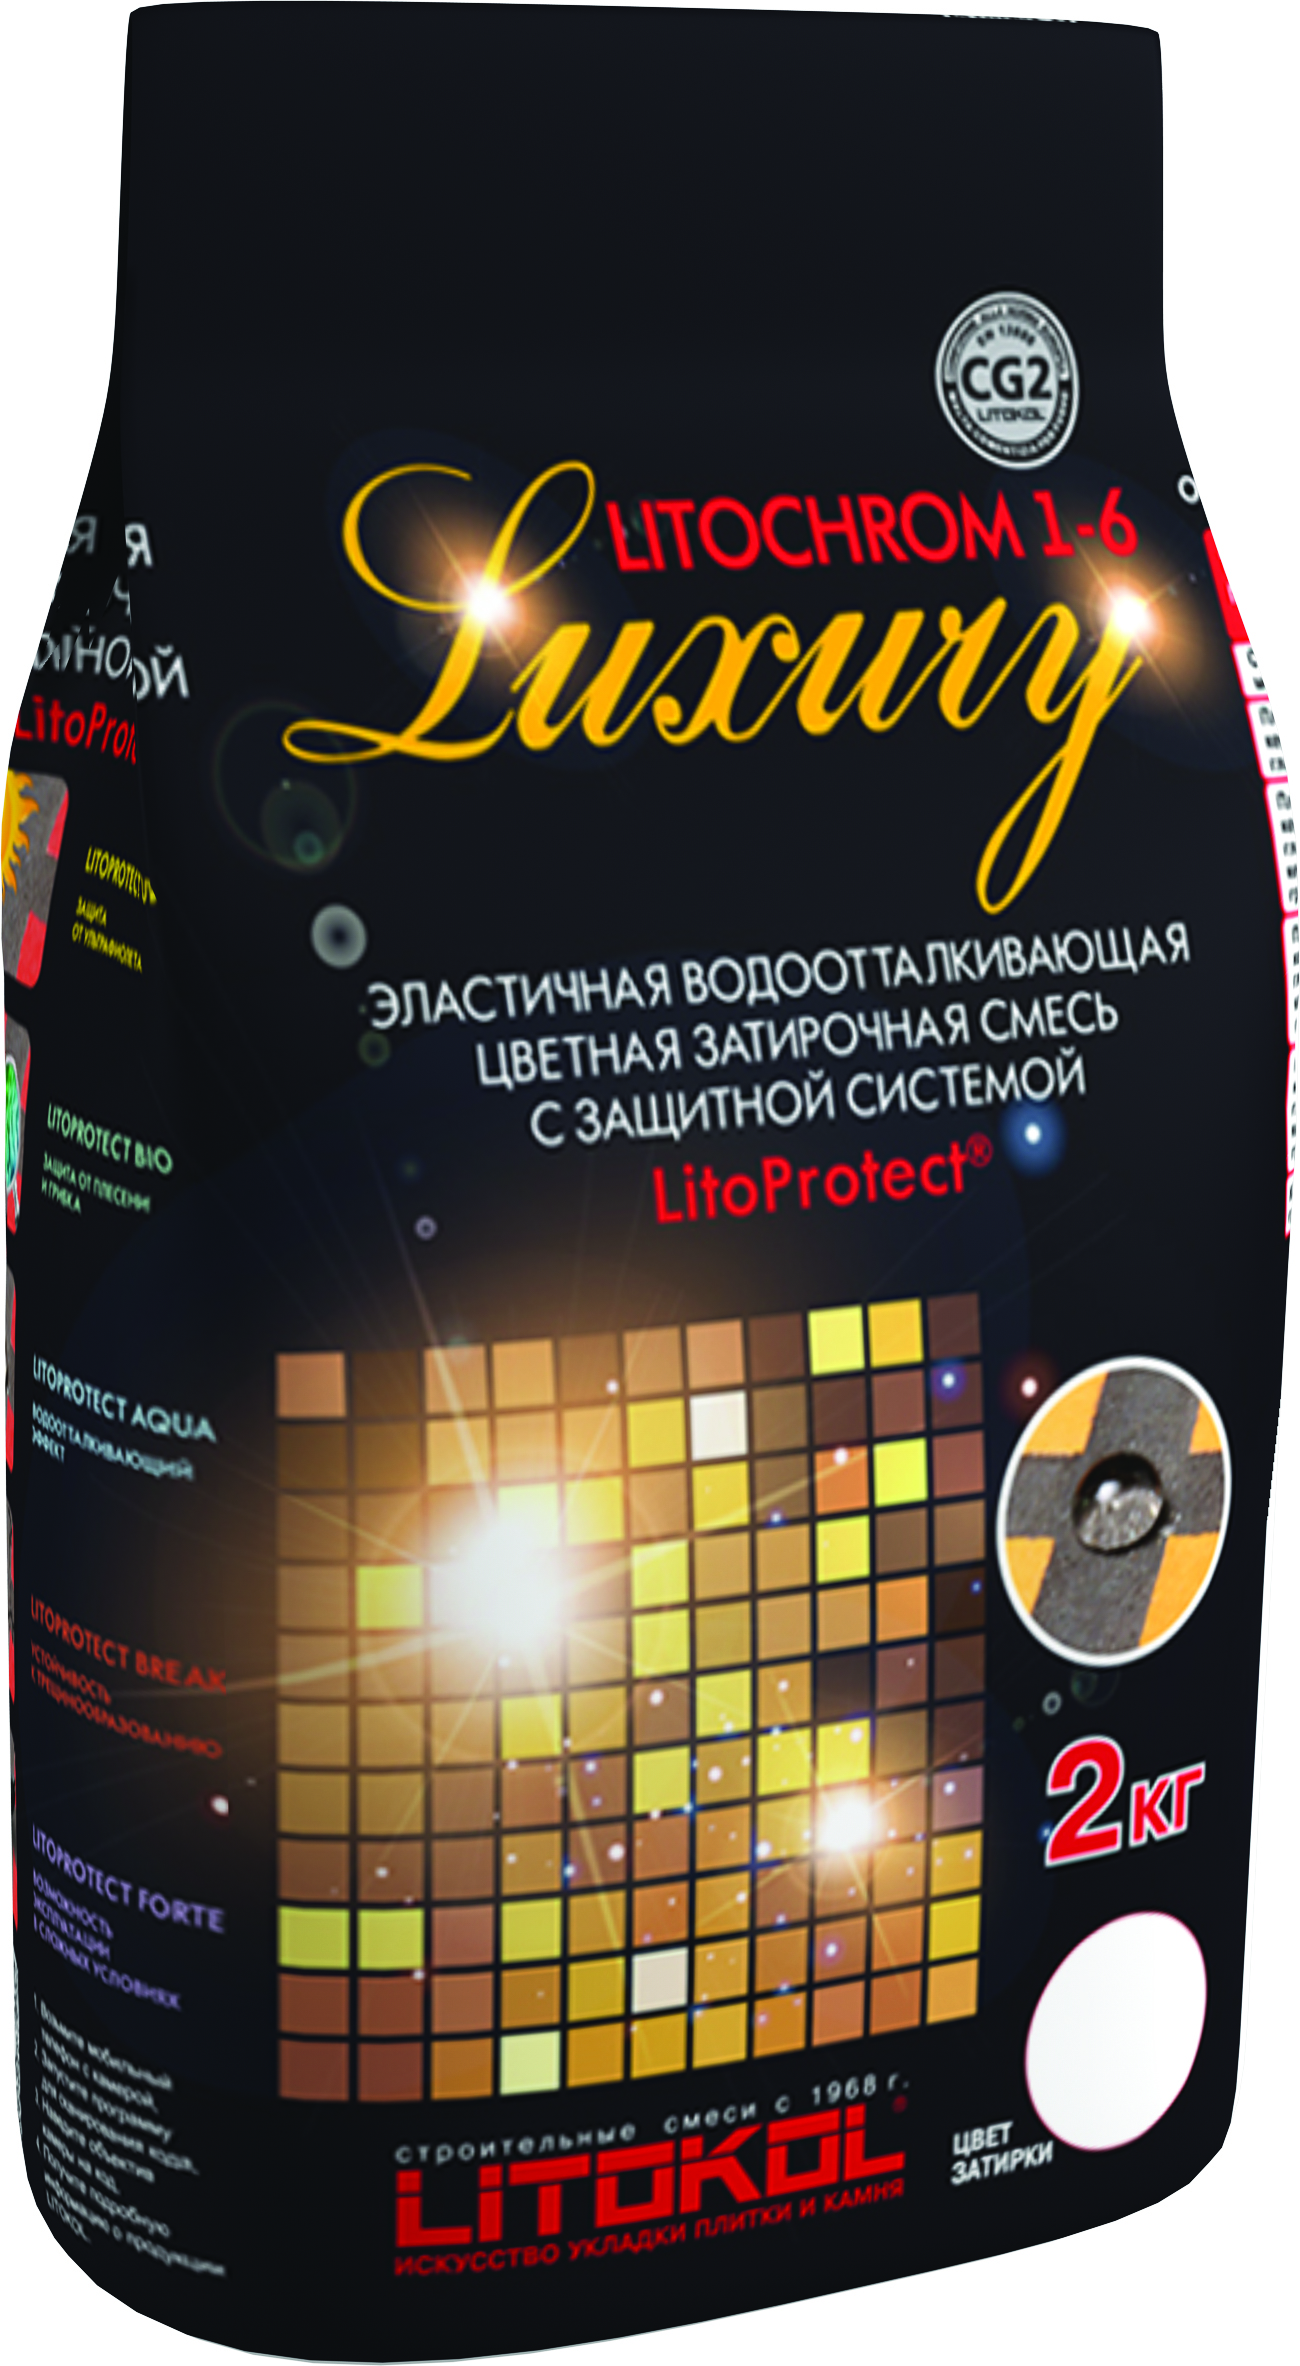 Купить Litokol Litochrom 1-6 Luxury C.110, 2 кг